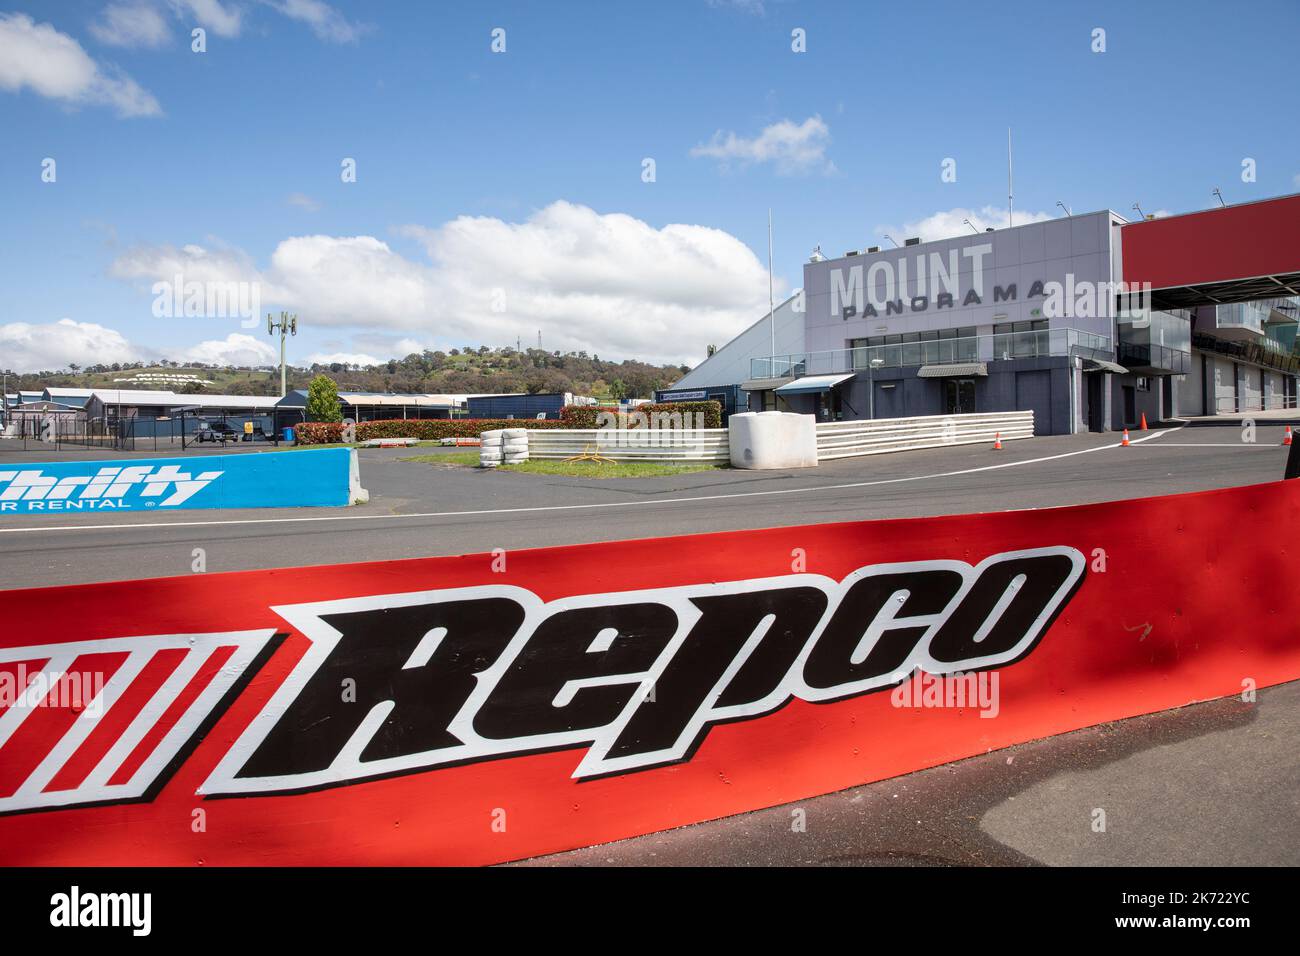 Mount Panorama motor racing circuit for races including Bathurst 1000,Bathurst,NSW,Australia Stock Photo